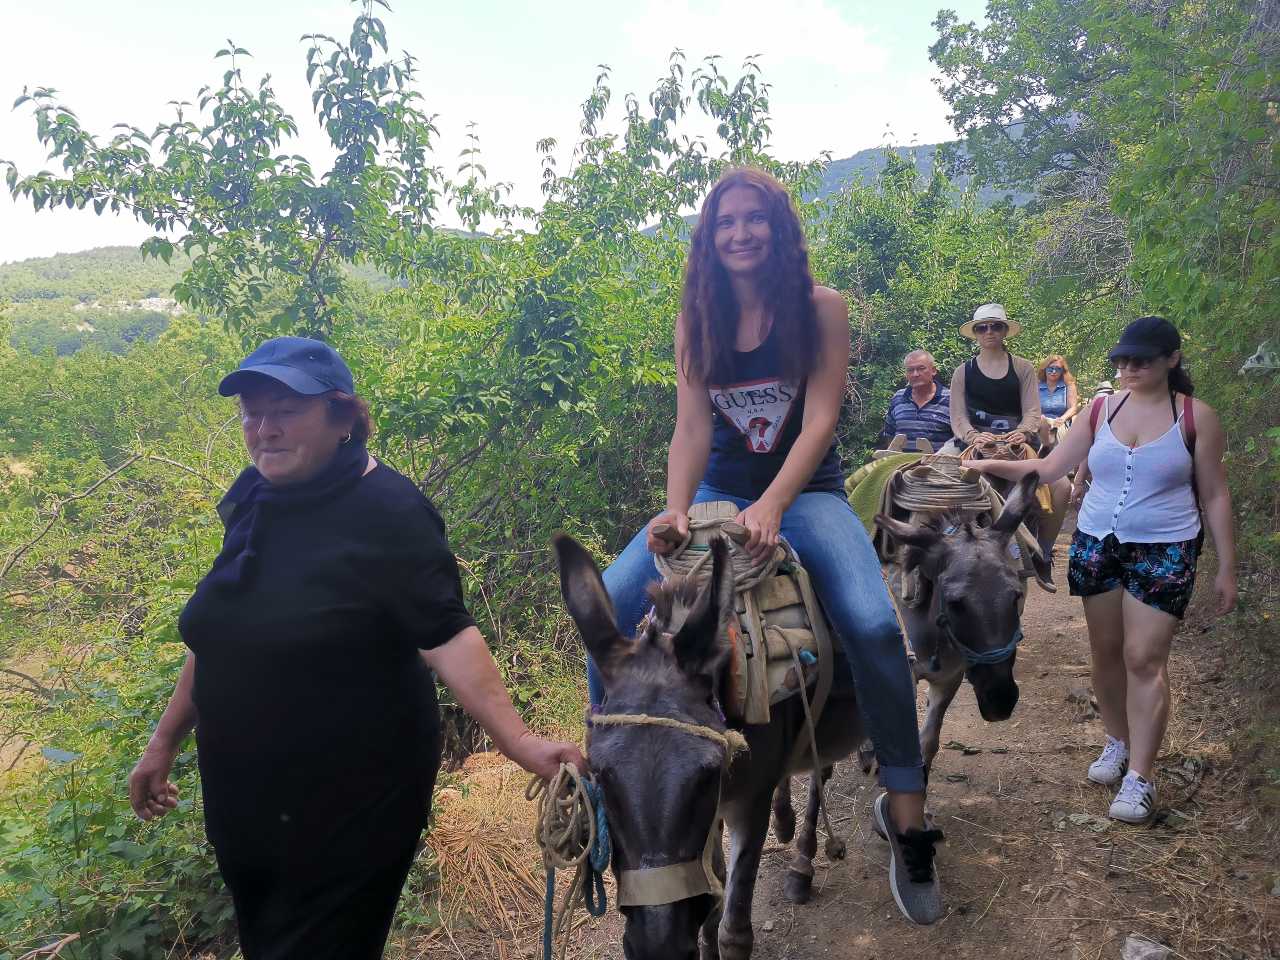 Walk through Galicica with donkeys